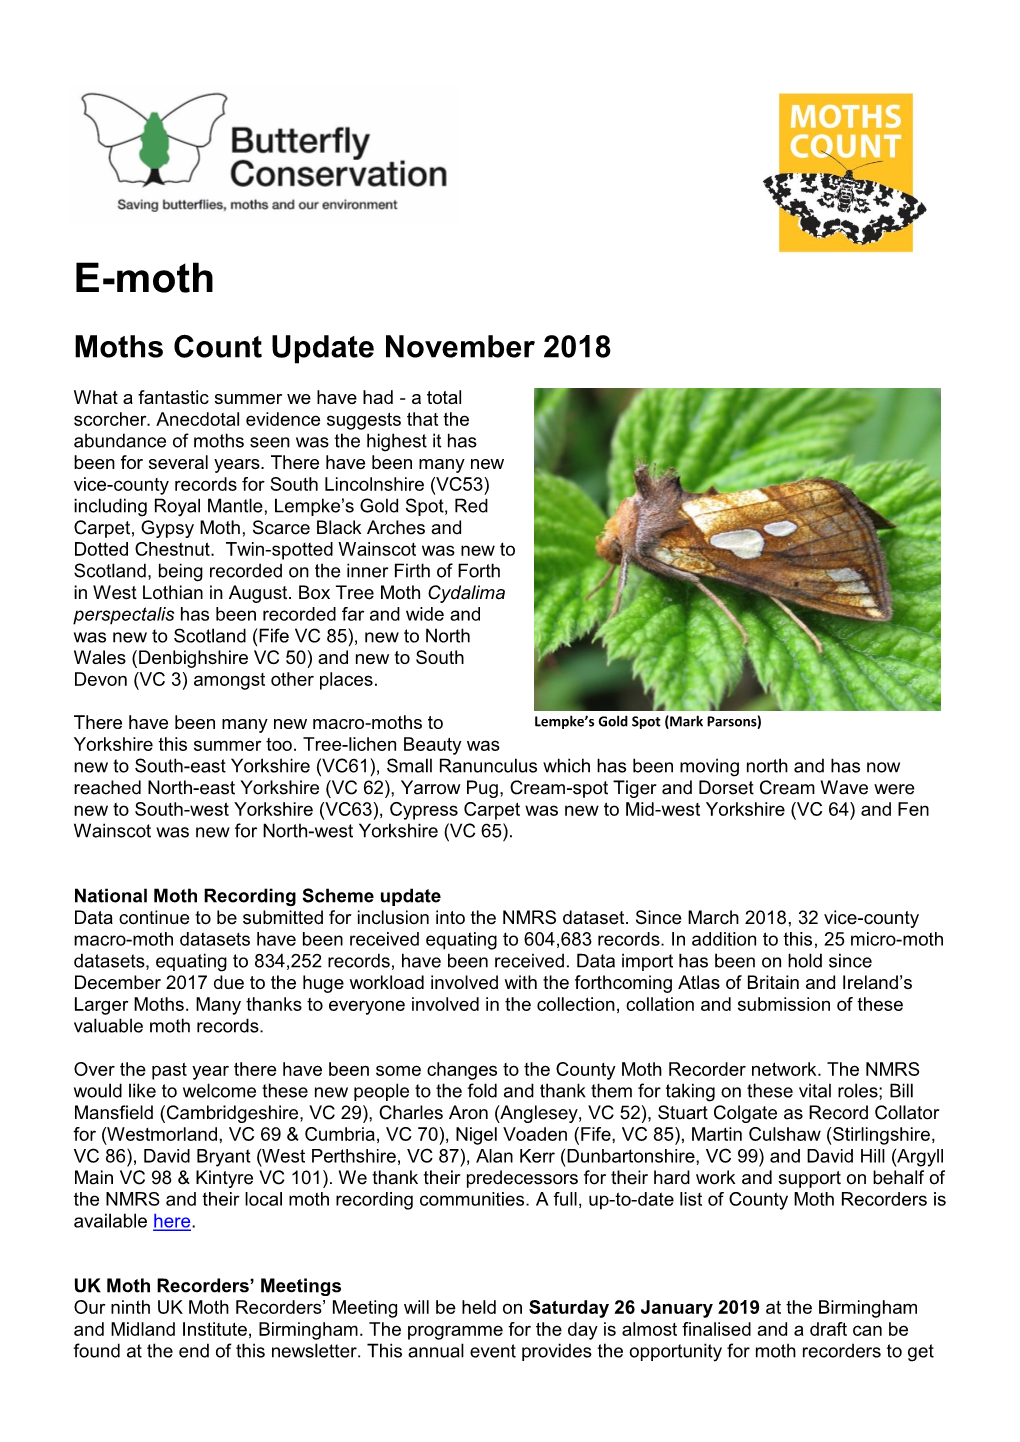 E-Moth November 2018